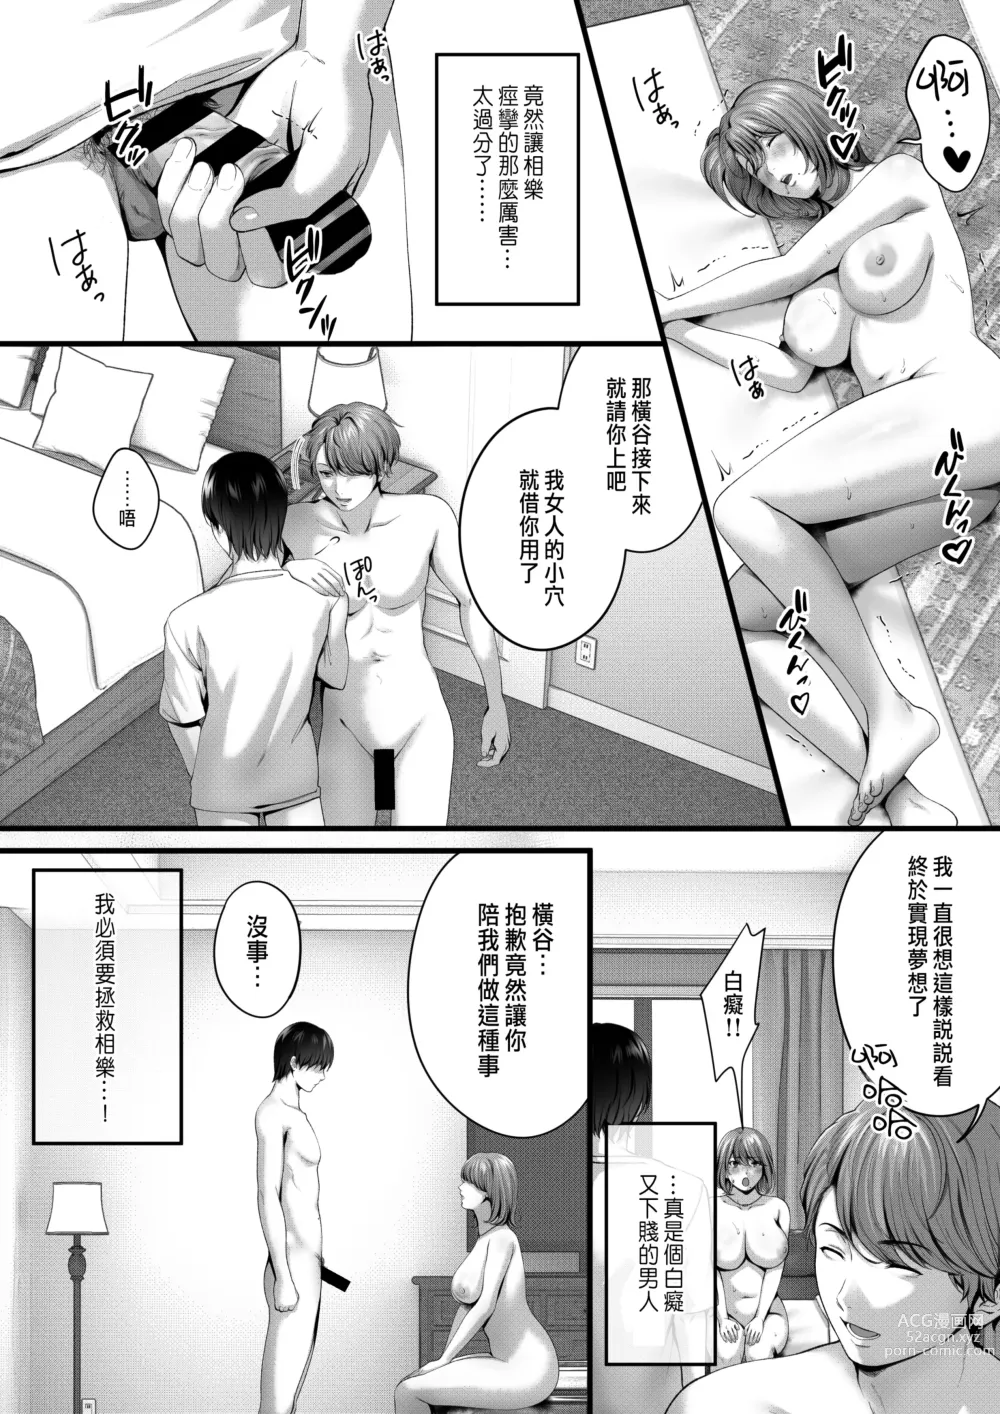 Page 24 of doujinshi Akogare datta, Sagara-san.